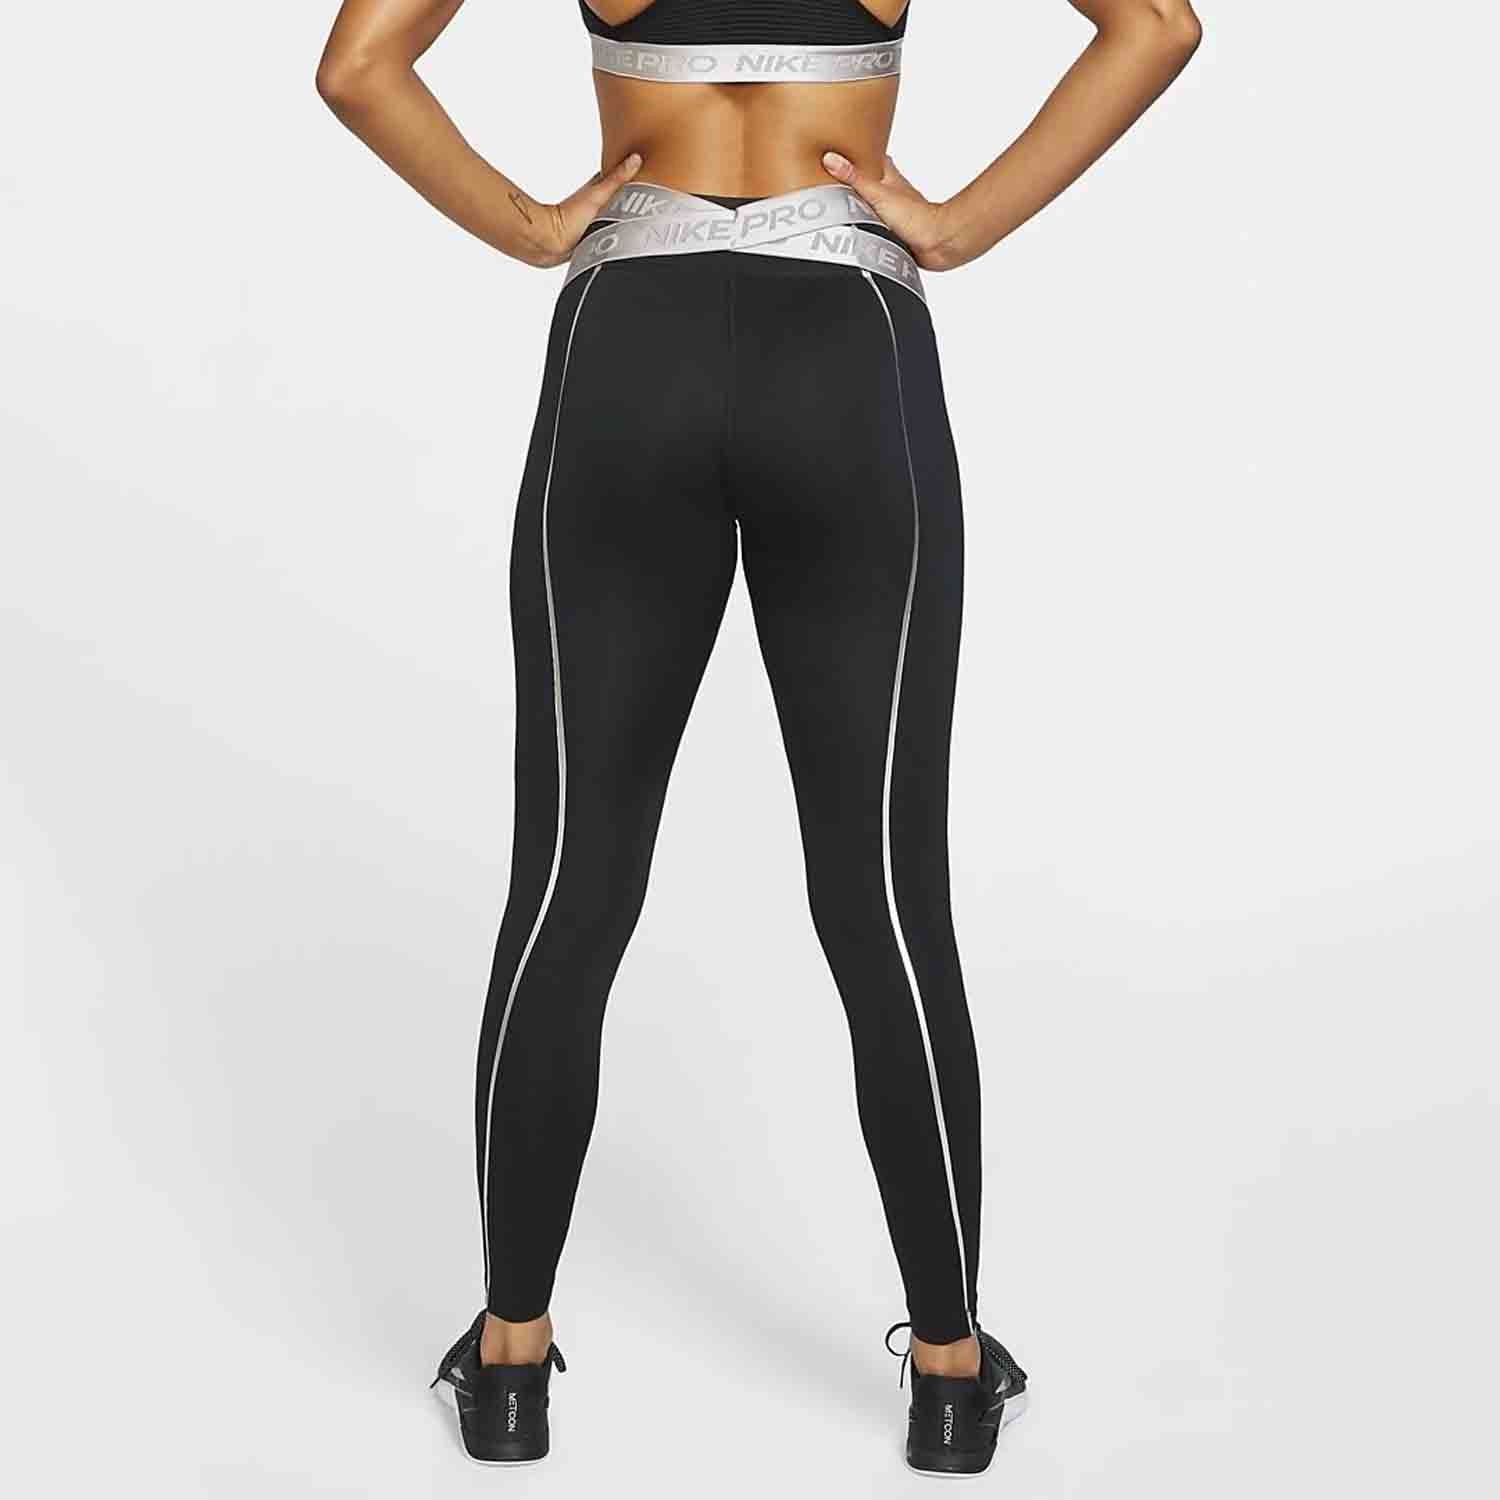 NIKE PRO HYPERWARM Leggings Black Women's Size Medium $14.00 - PicClick